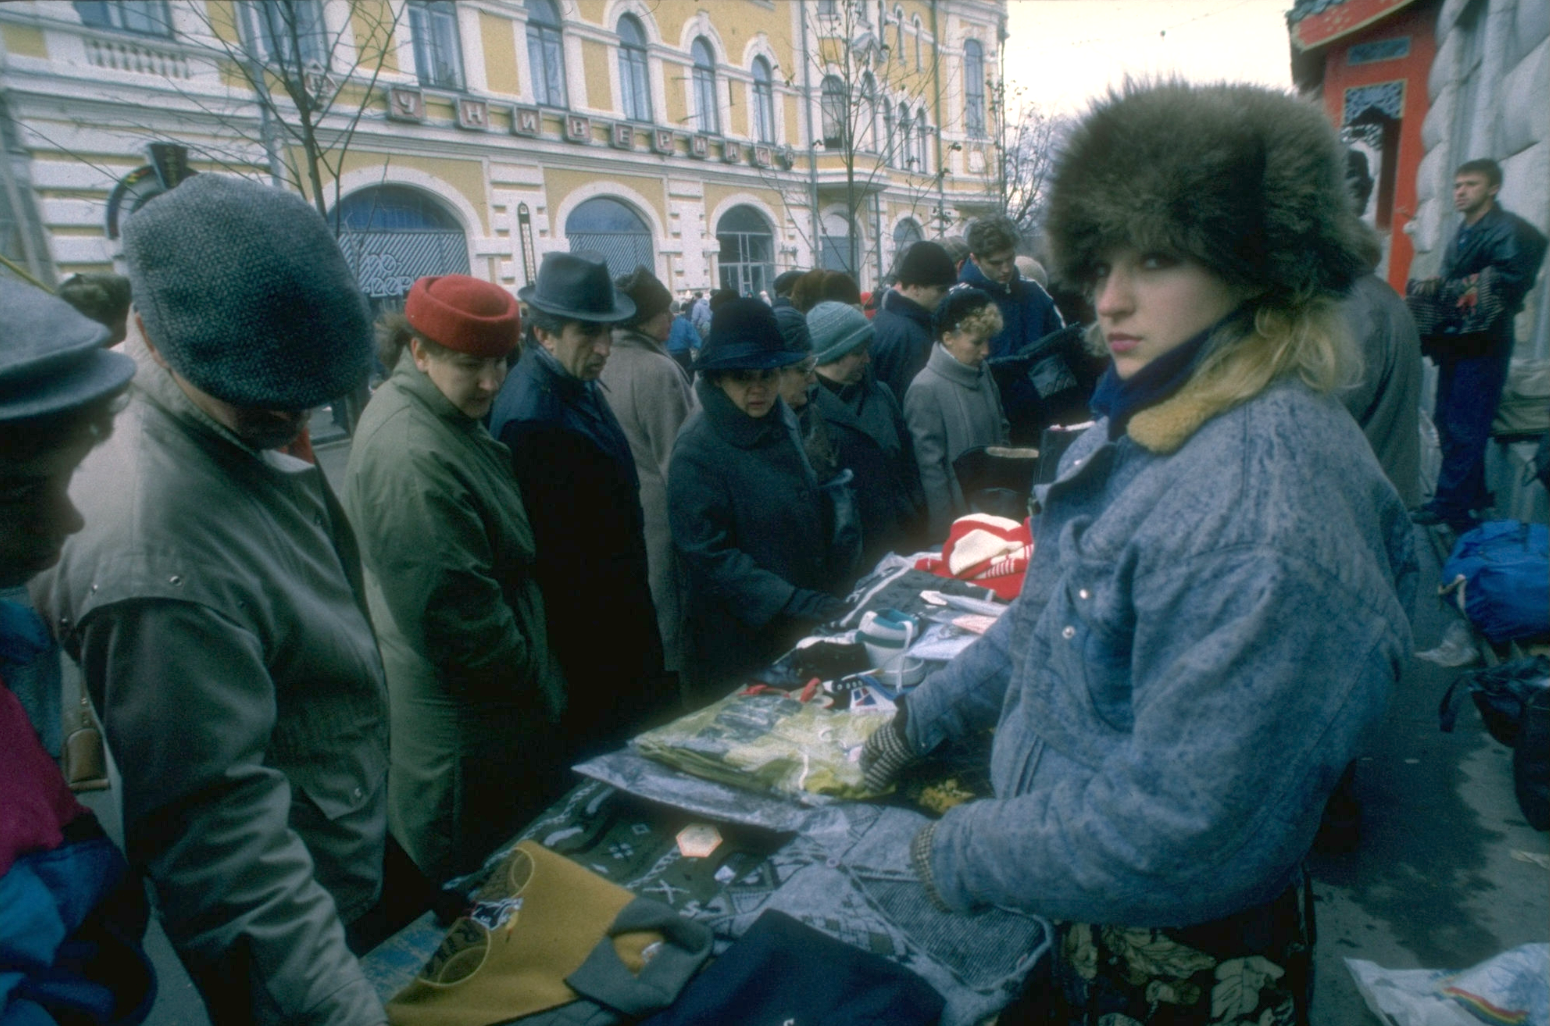 Фото людей из 90 х россия